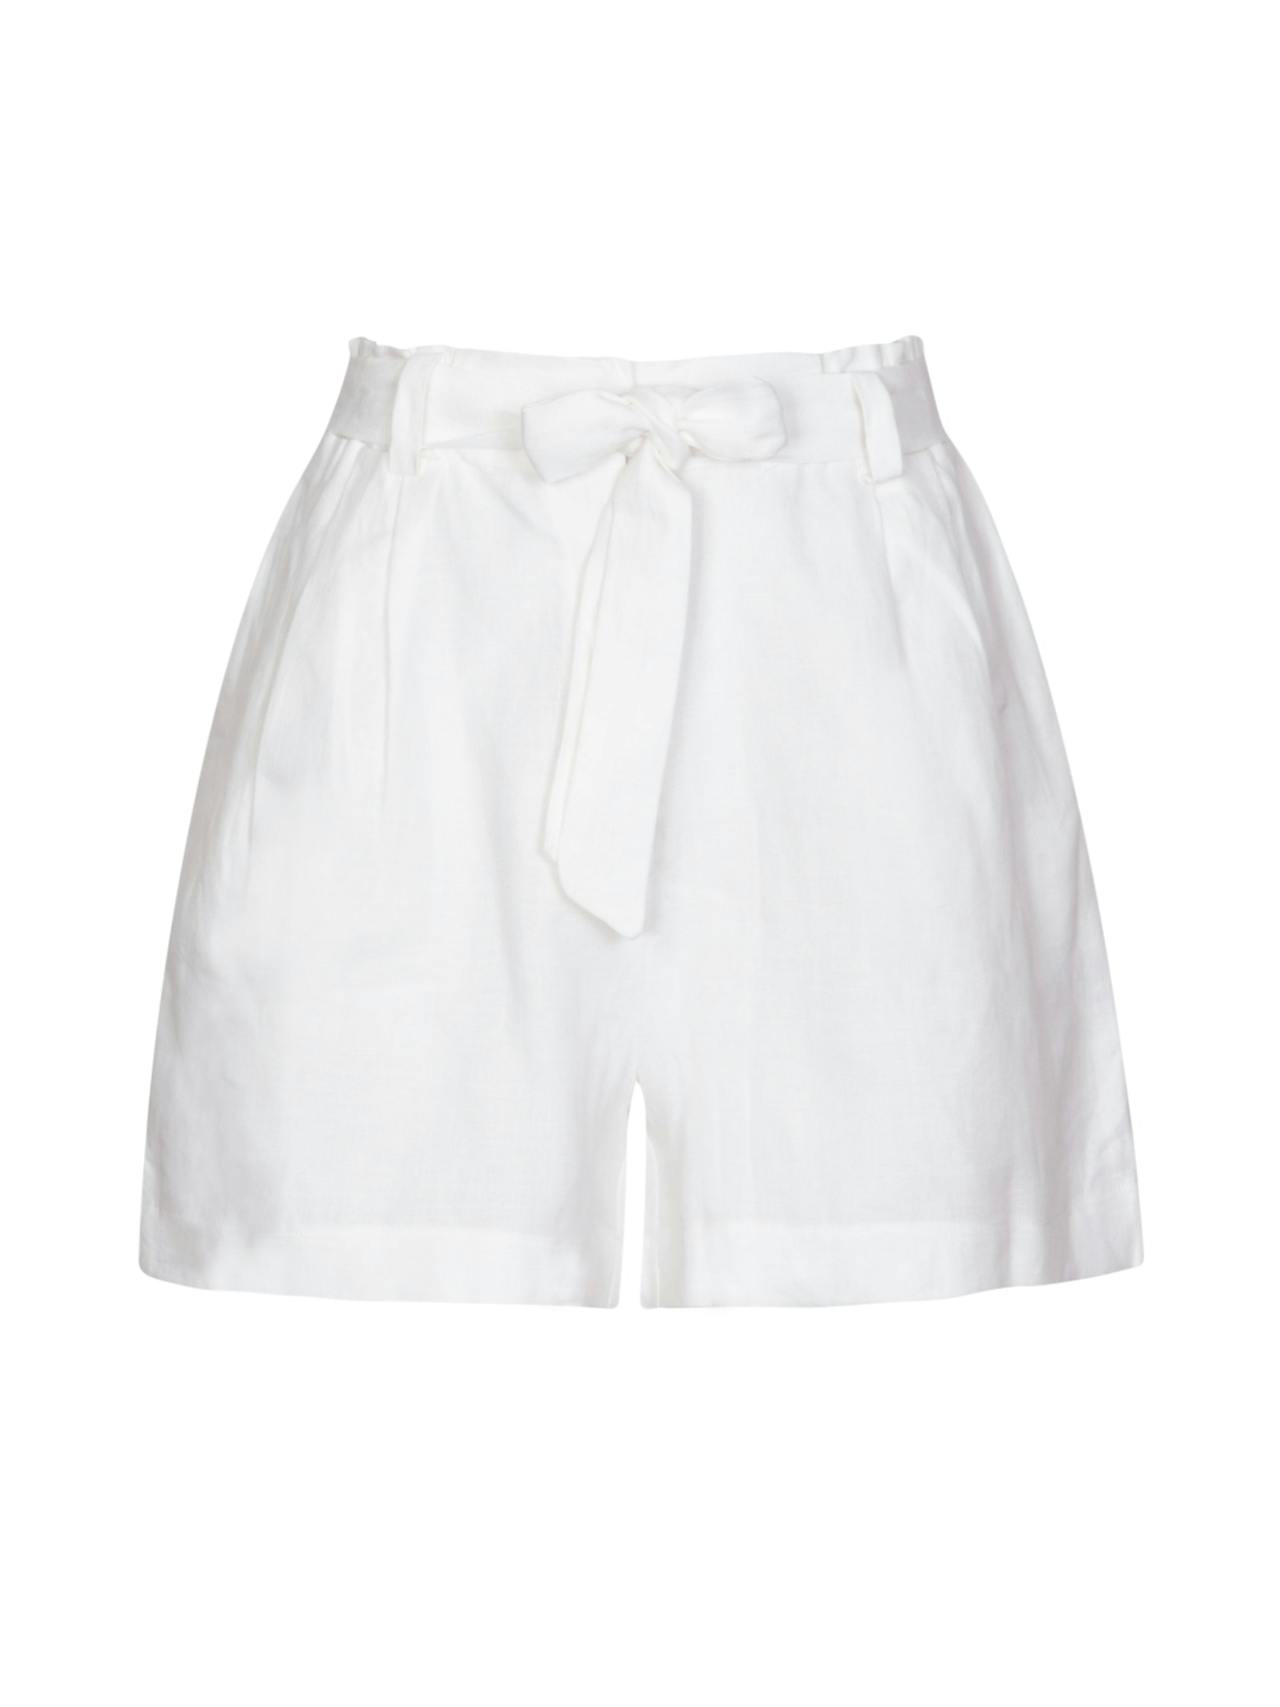 White Ibiza shorts